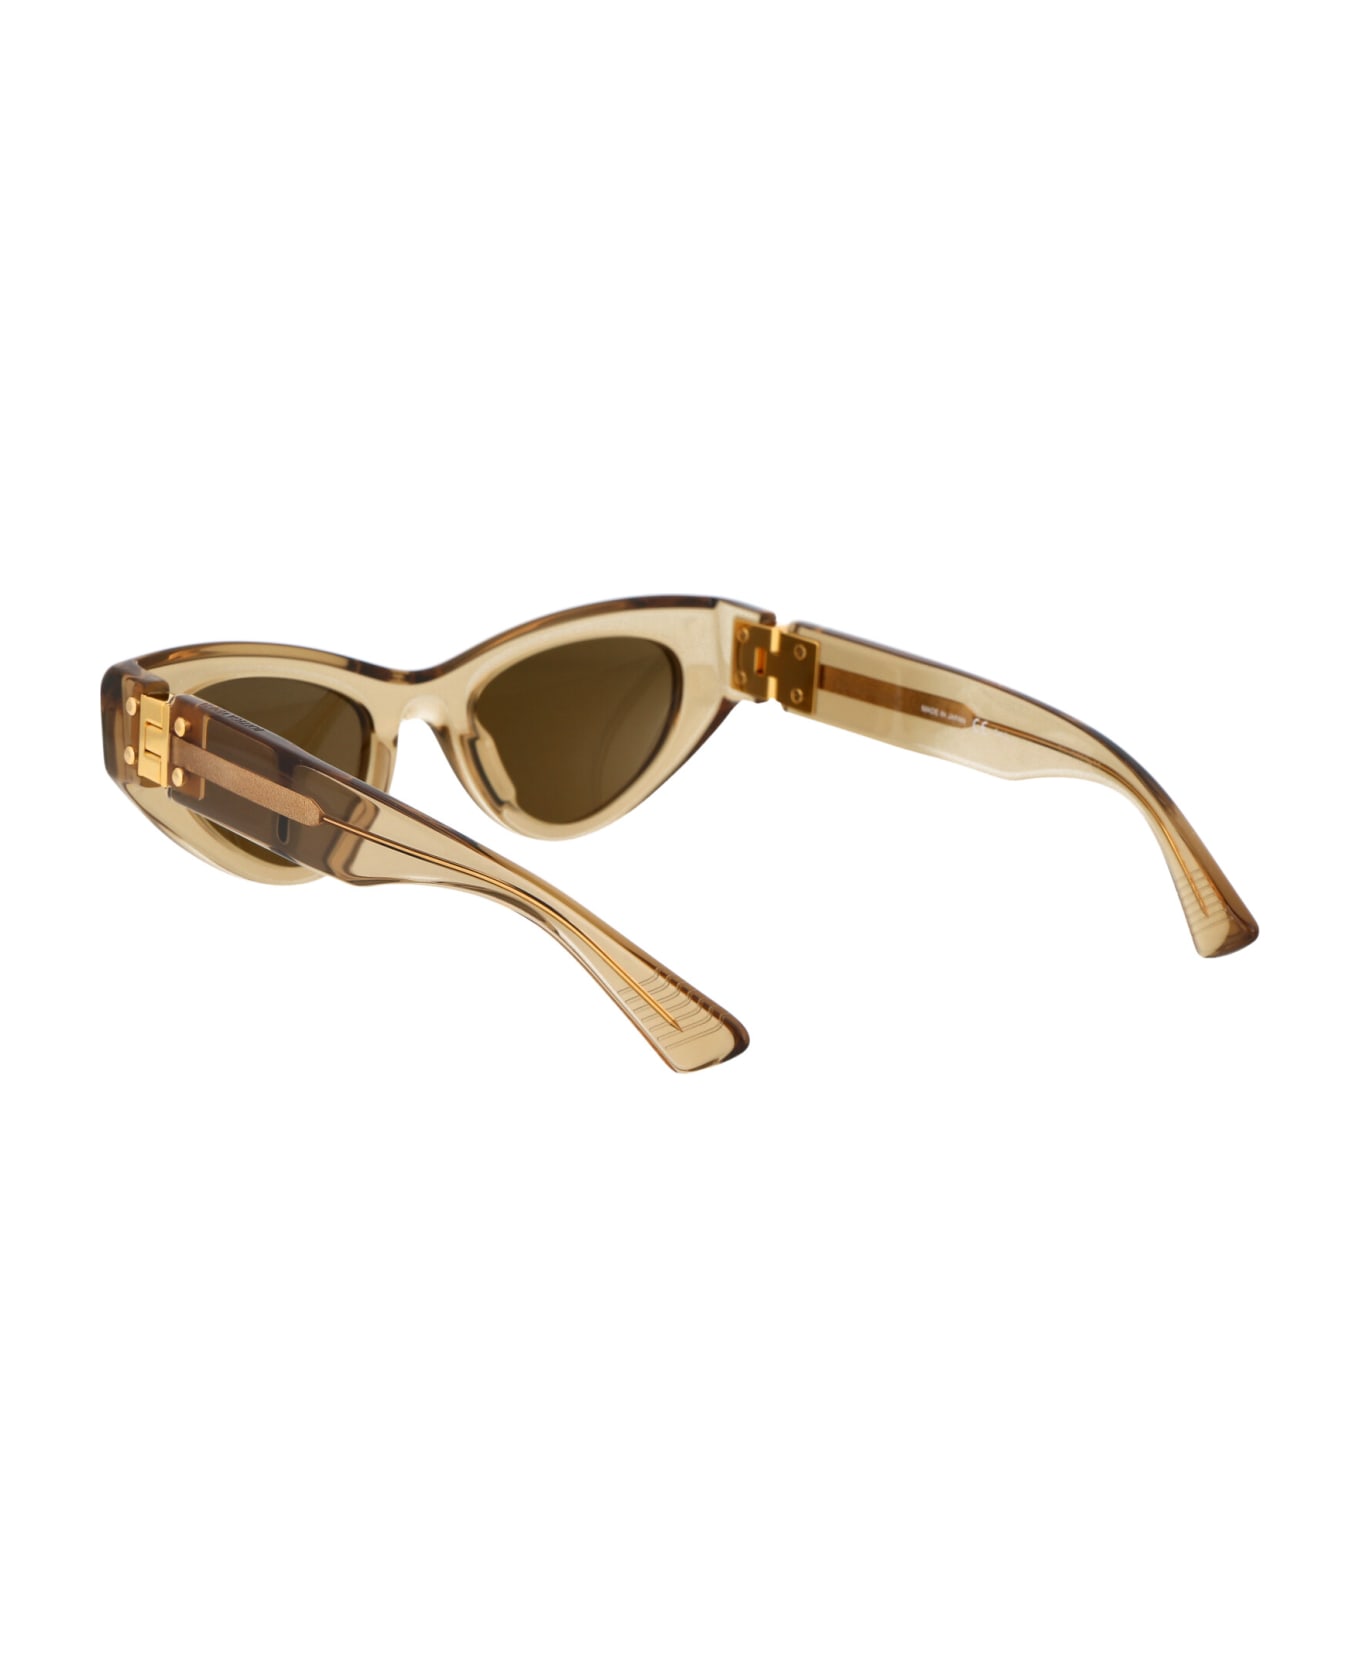 Bottega Veneta Eyewear Bv1142s Sunglasses - 003 BROWN BROWN BRONZE サングラス